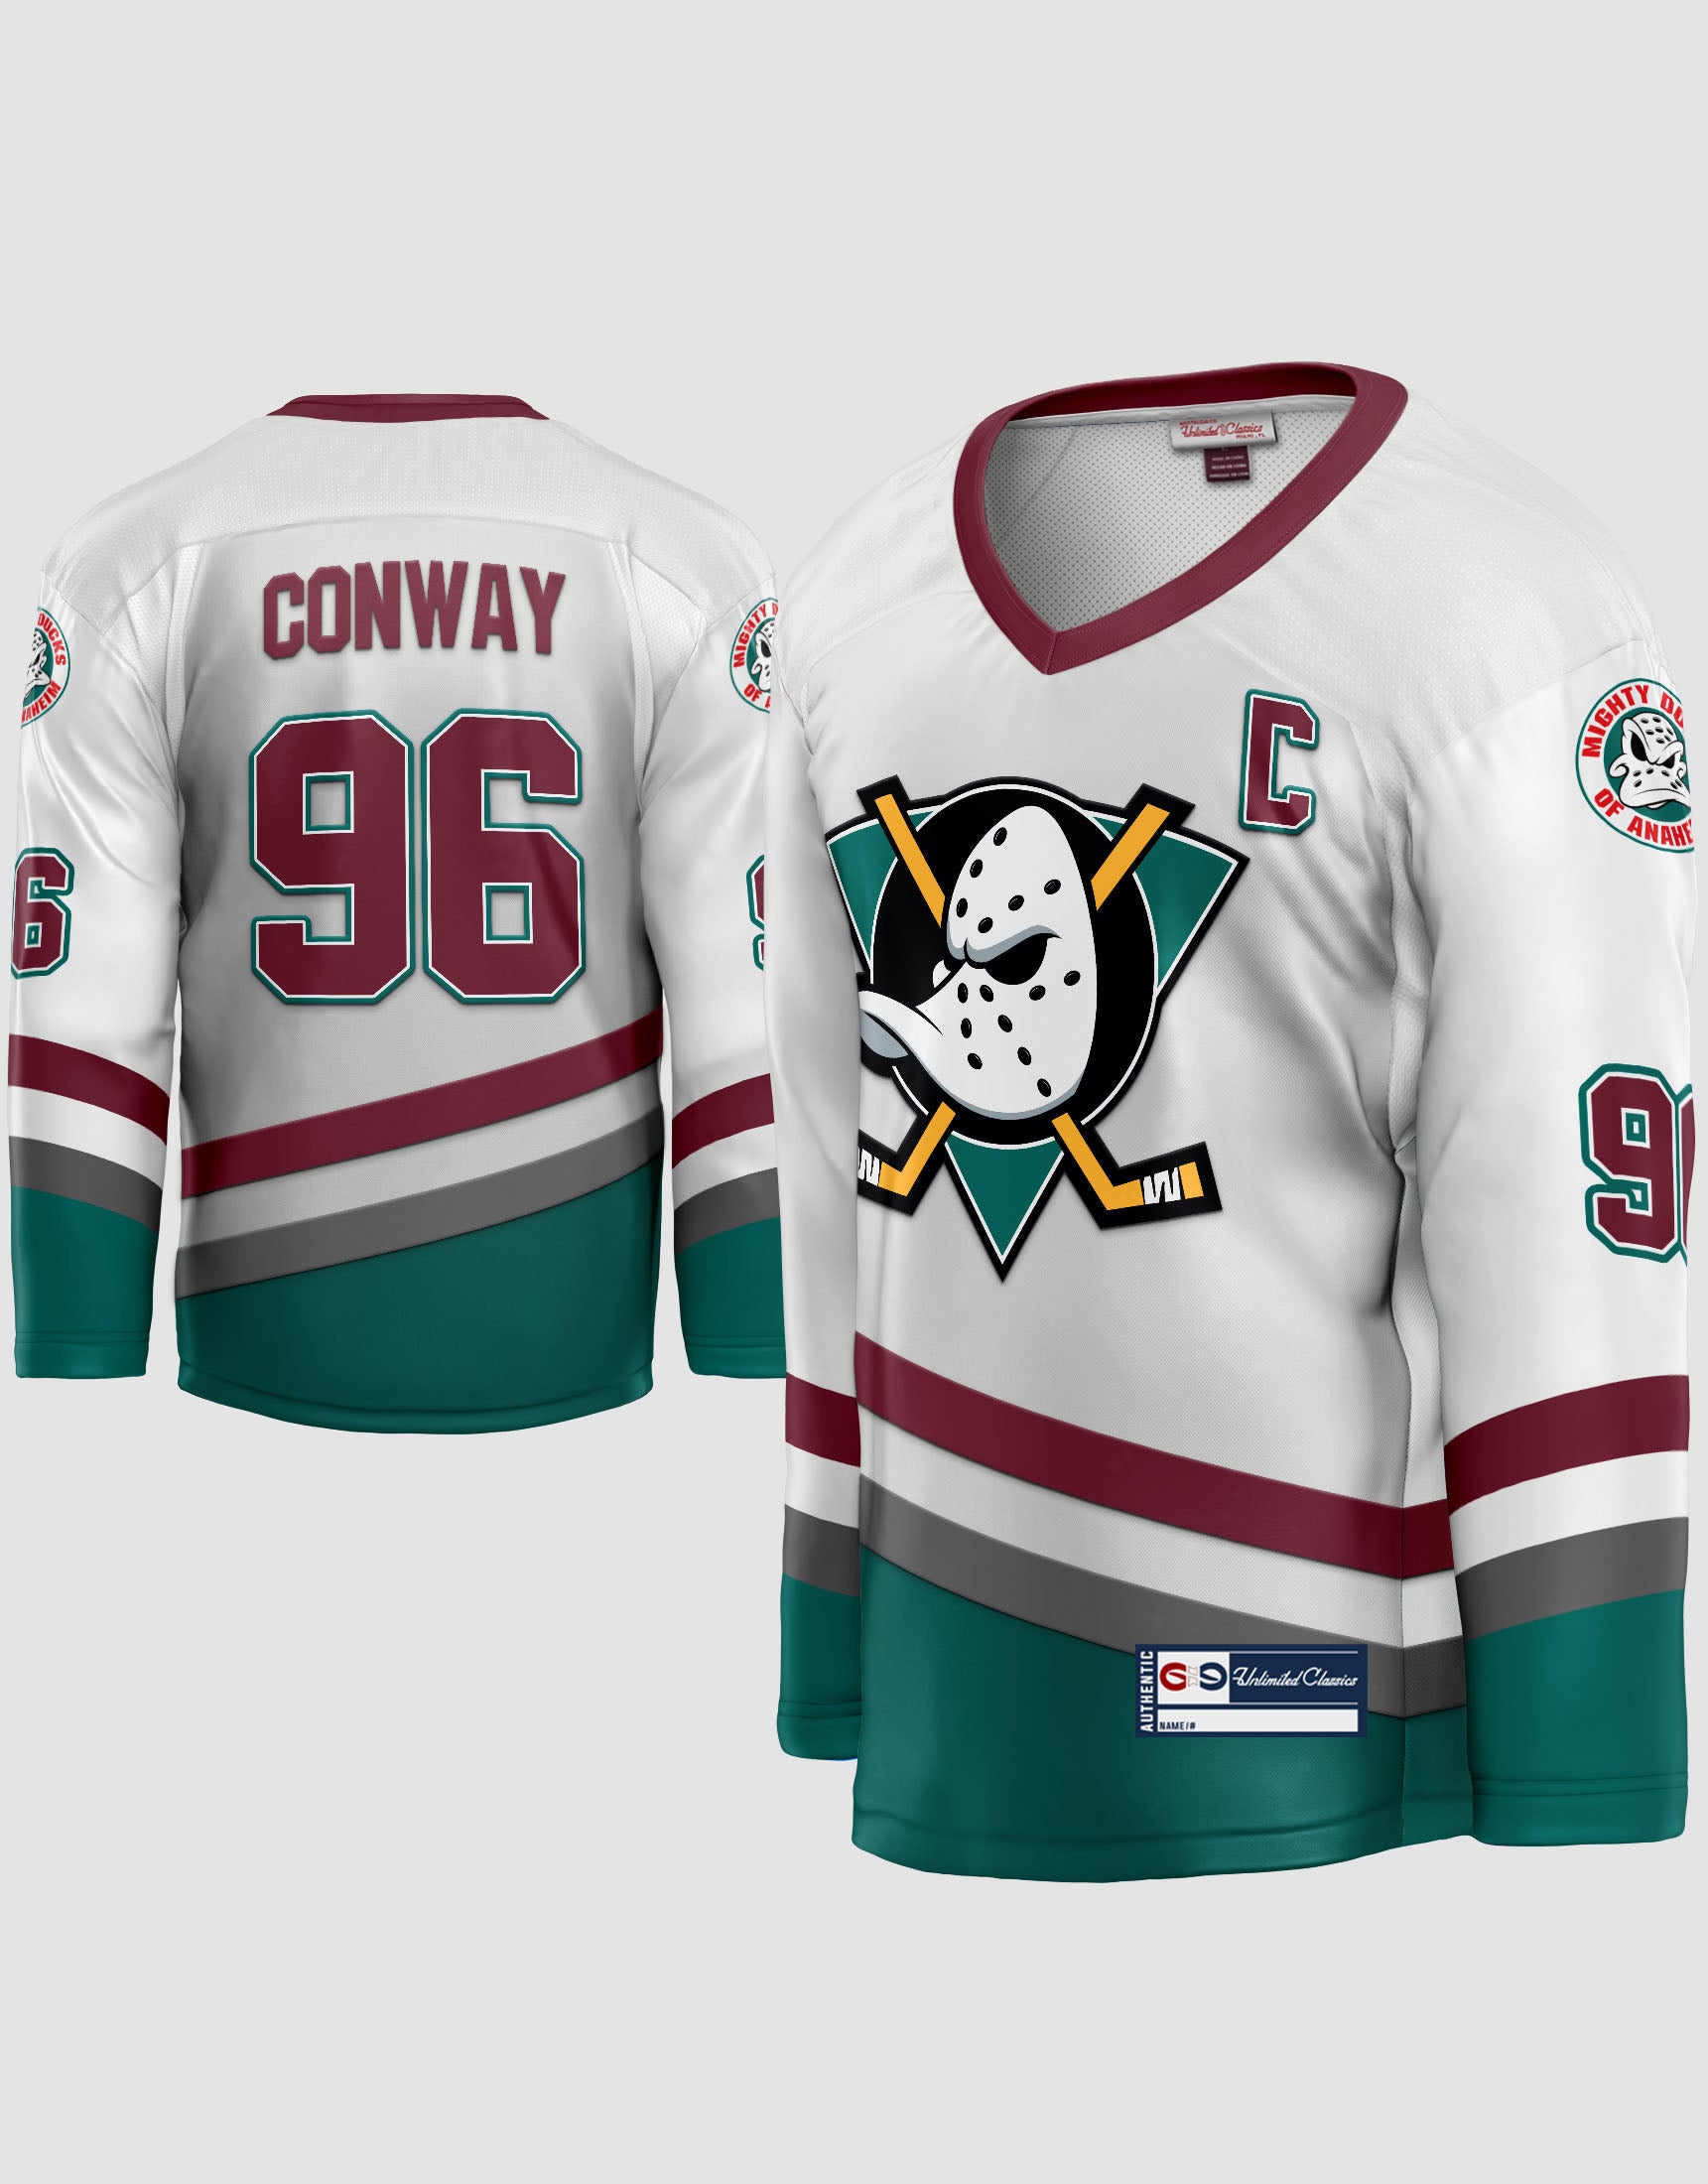 Mighty Ducks NHL Hockey Sports Men 1992 Charlie Conway #96 Hockey Jersey  Medium for Sale in Hampton, VA - OfferUp